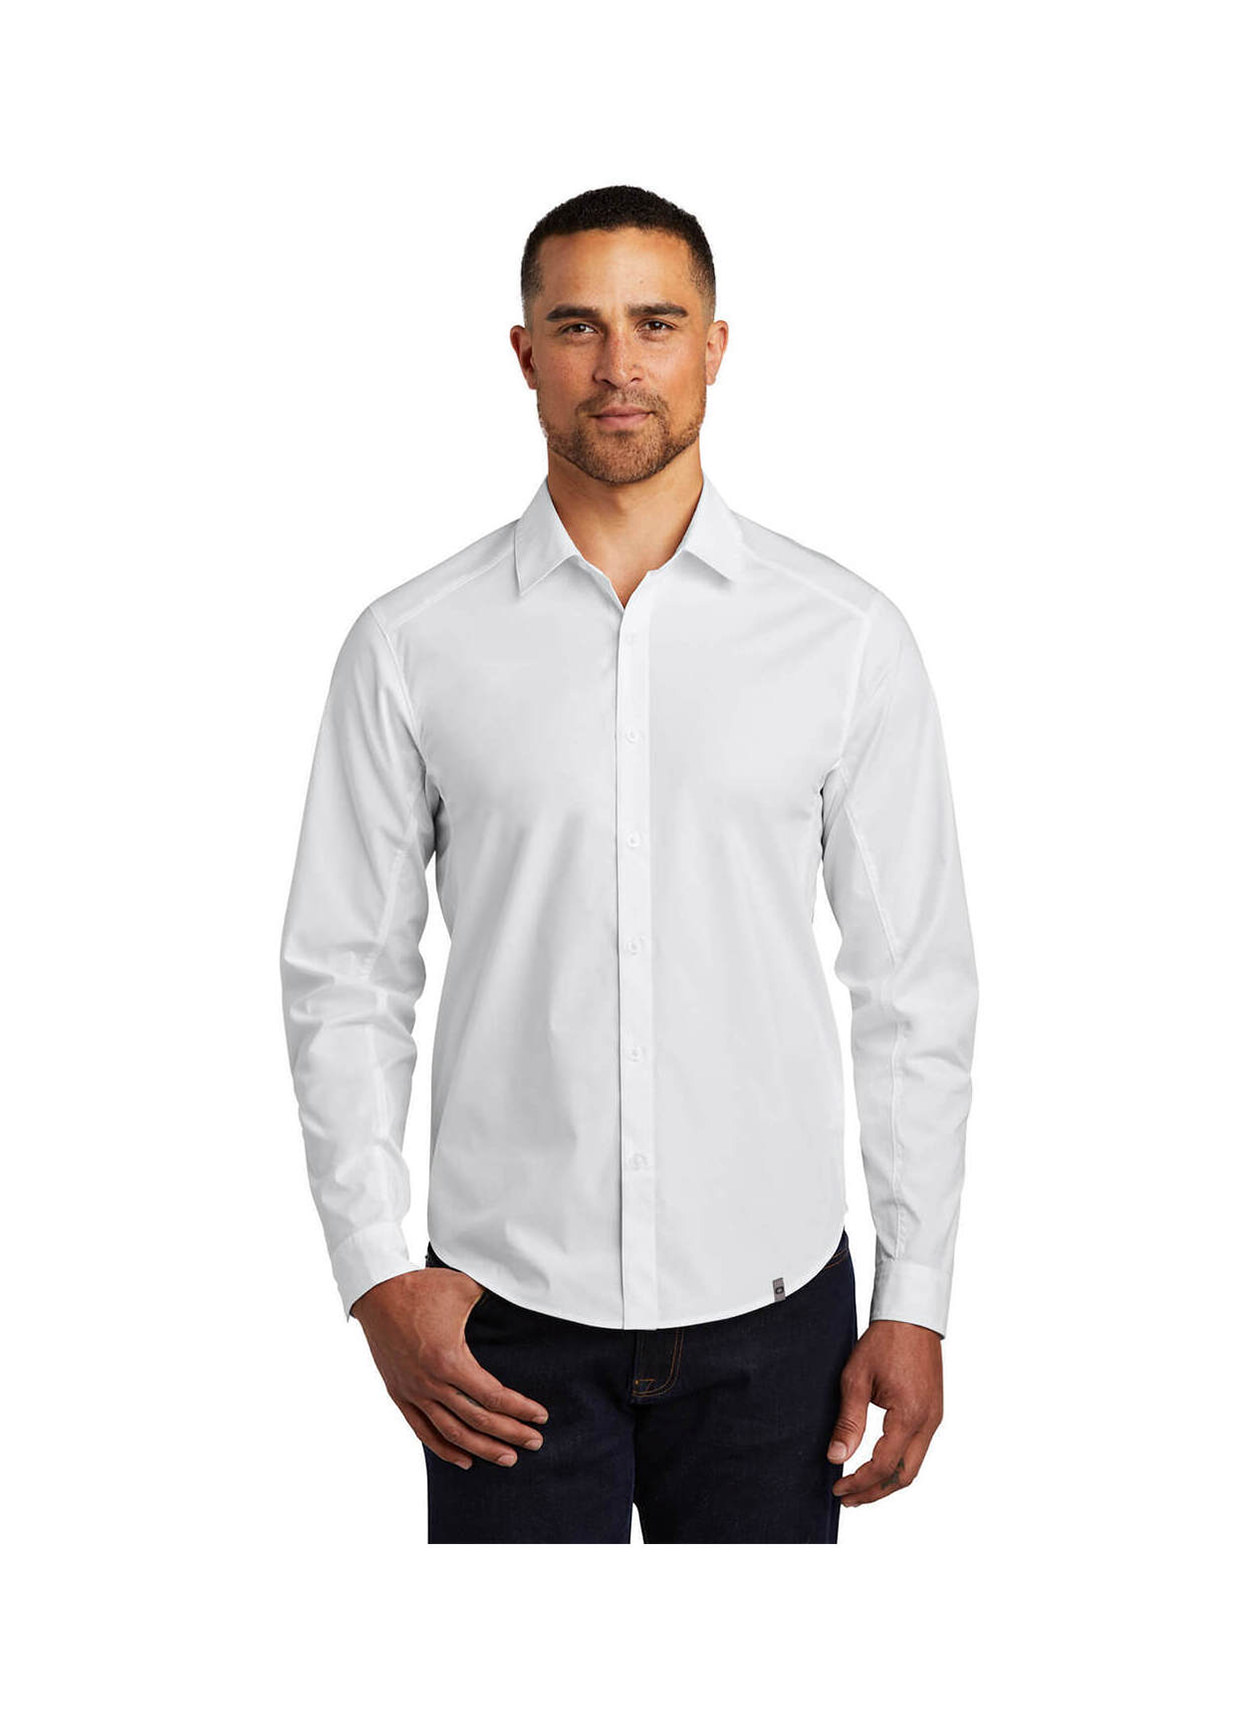 Embroidered Work Shirts OGIO Men's White Commuter Woven Shirt | Custom ...